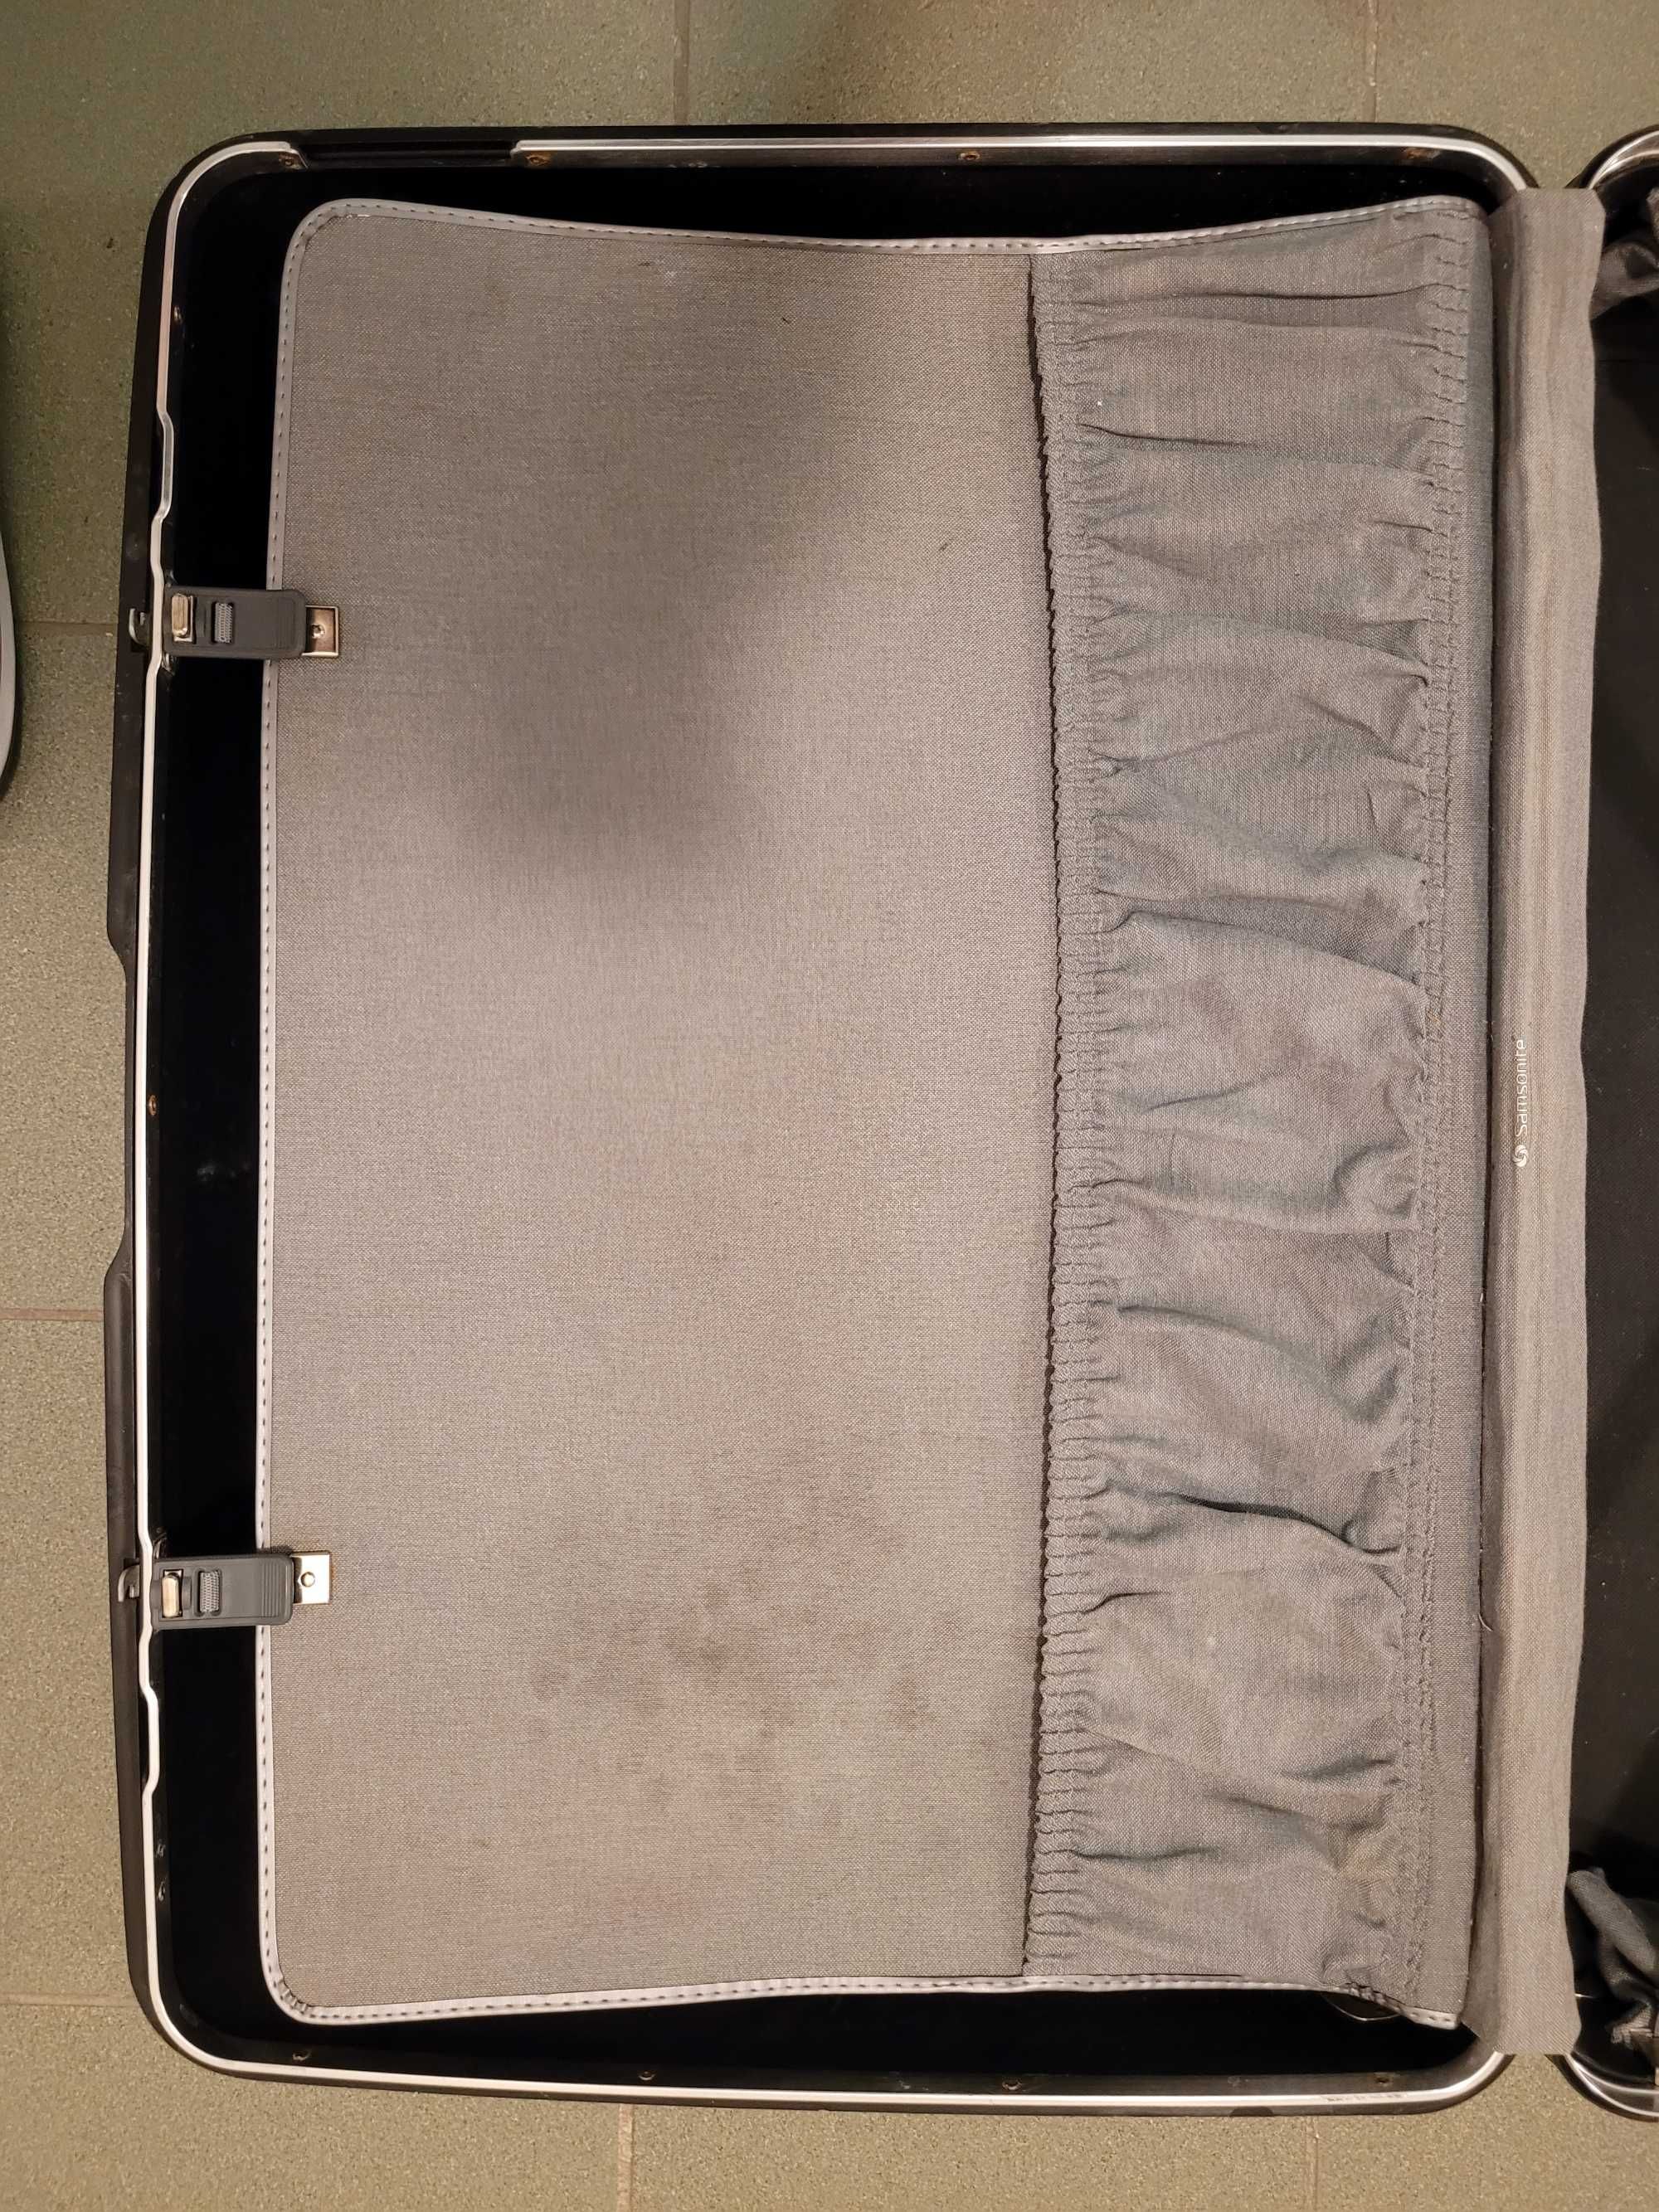 walizka Samsonite, duża, kółka, 70 x 53 x 25 cm